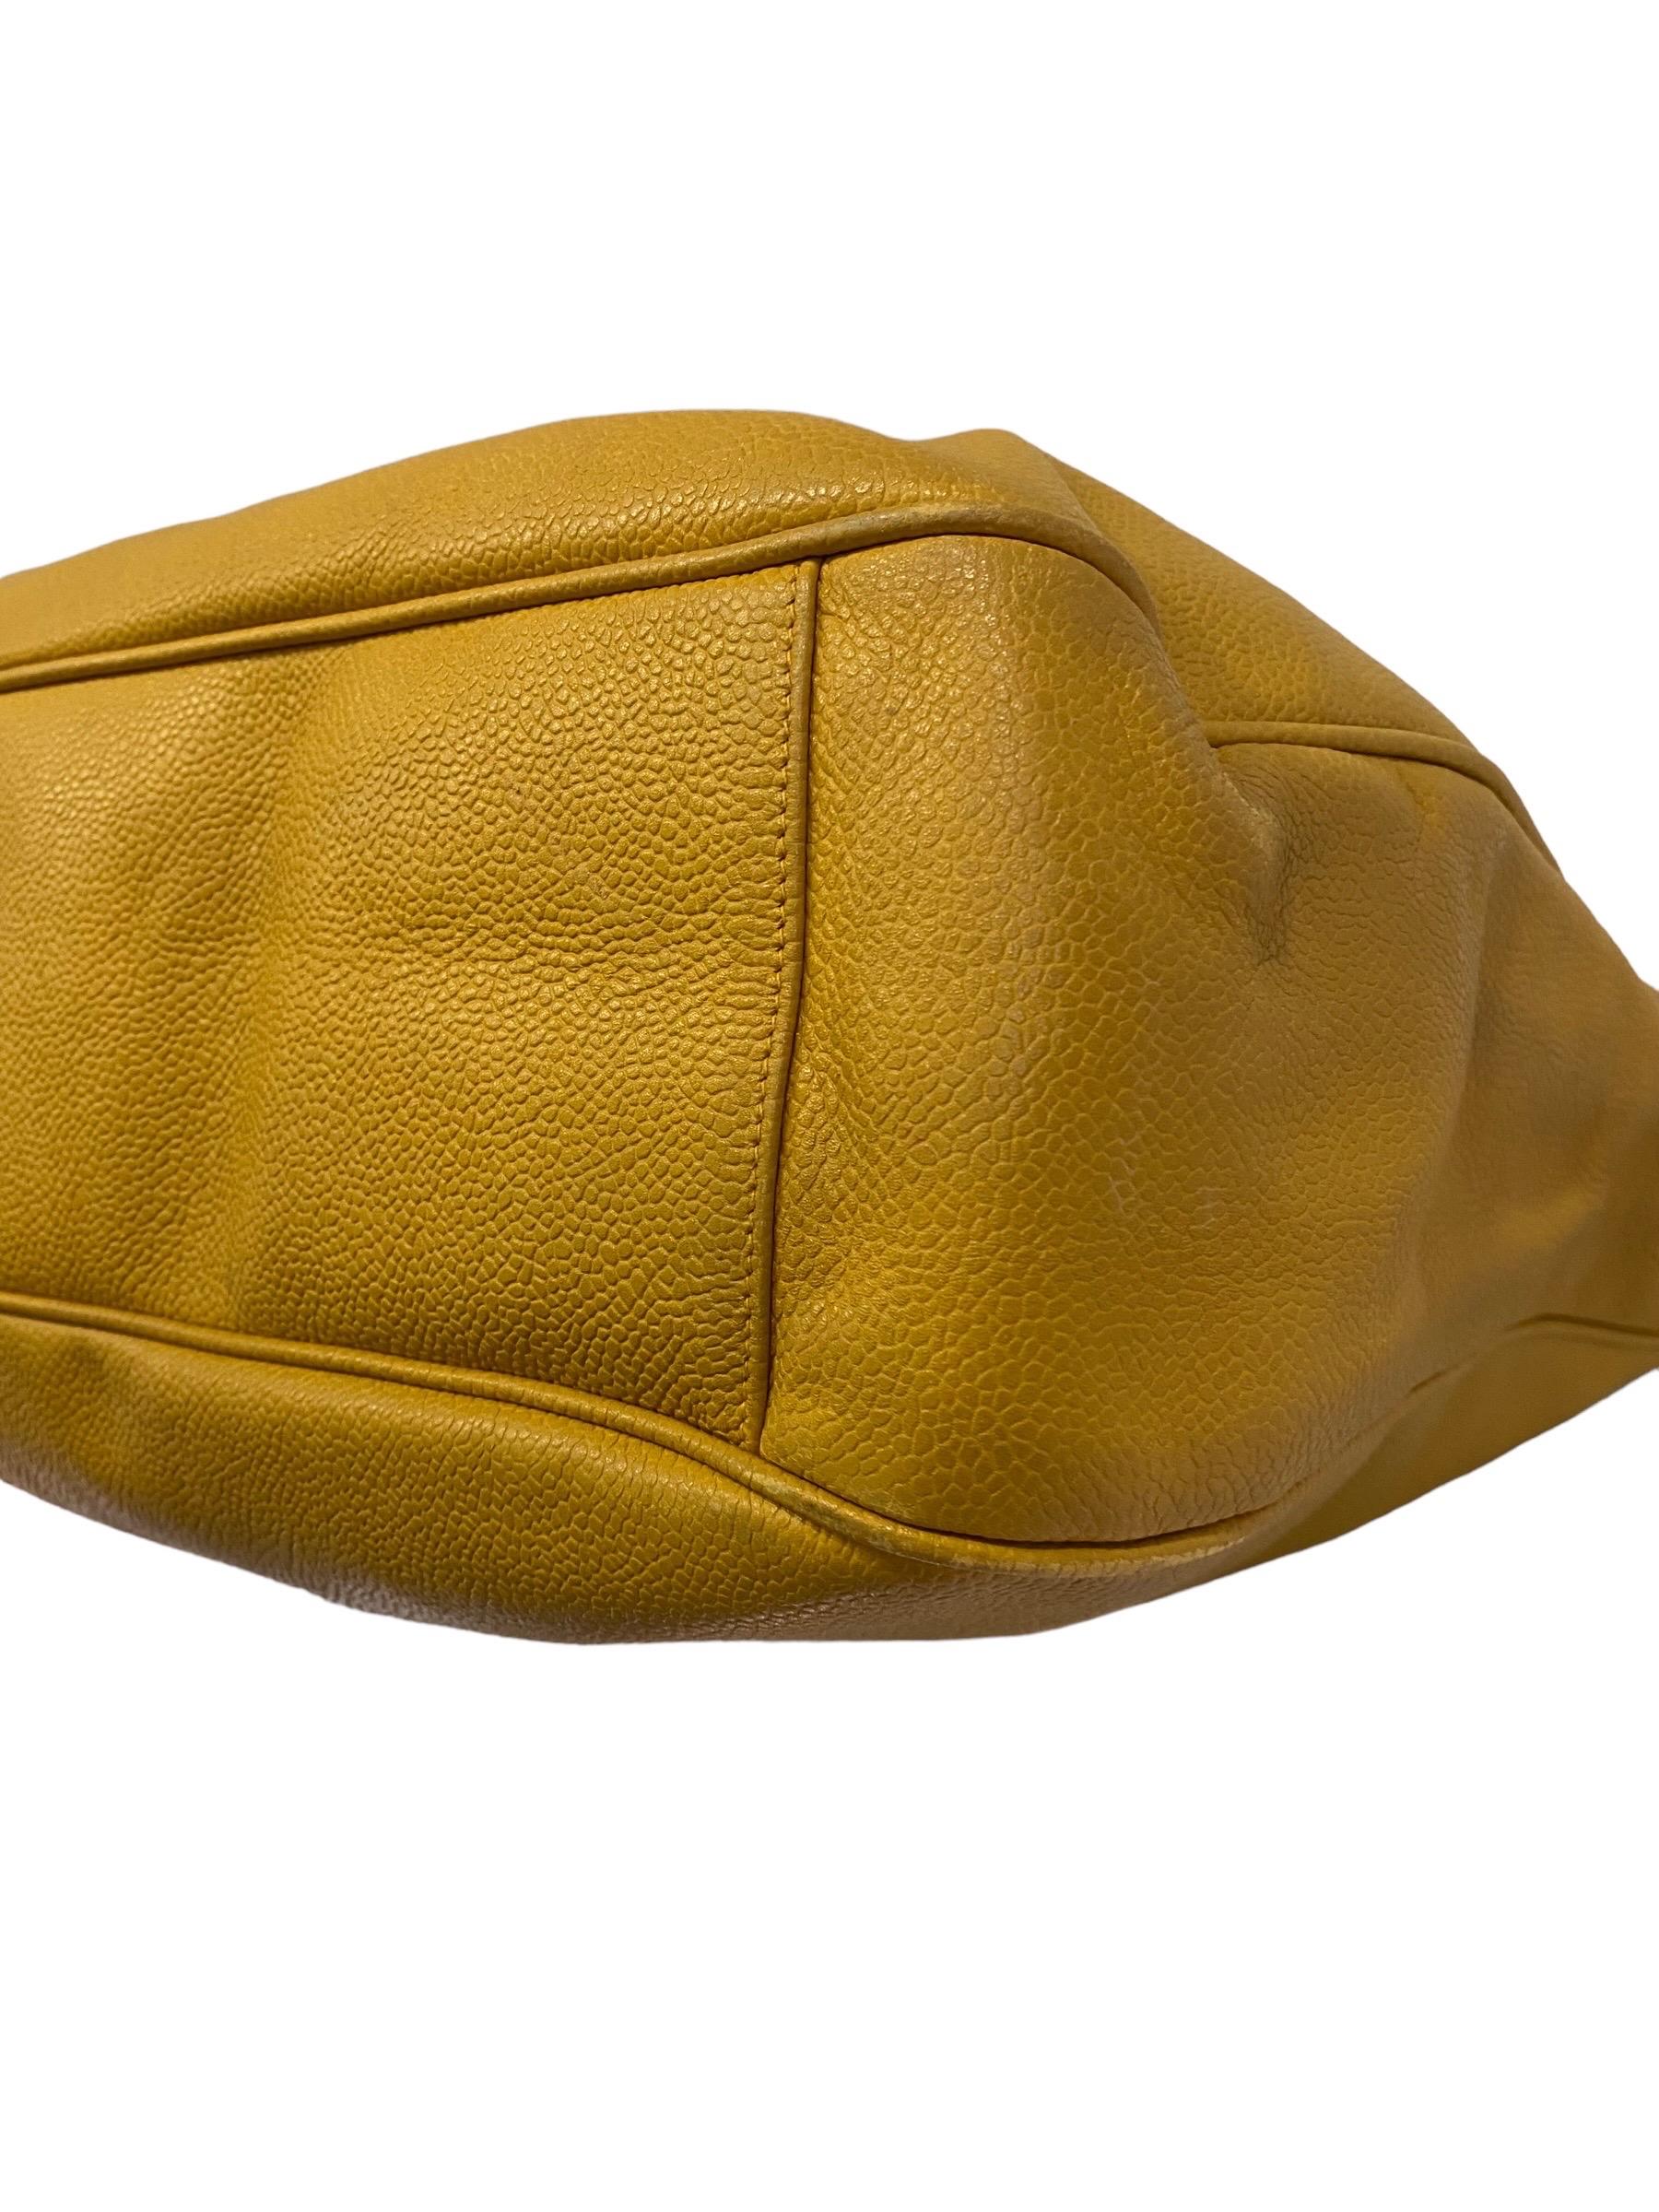 Chanel Yellow Big Tote Shoulder Bag Vintage  4